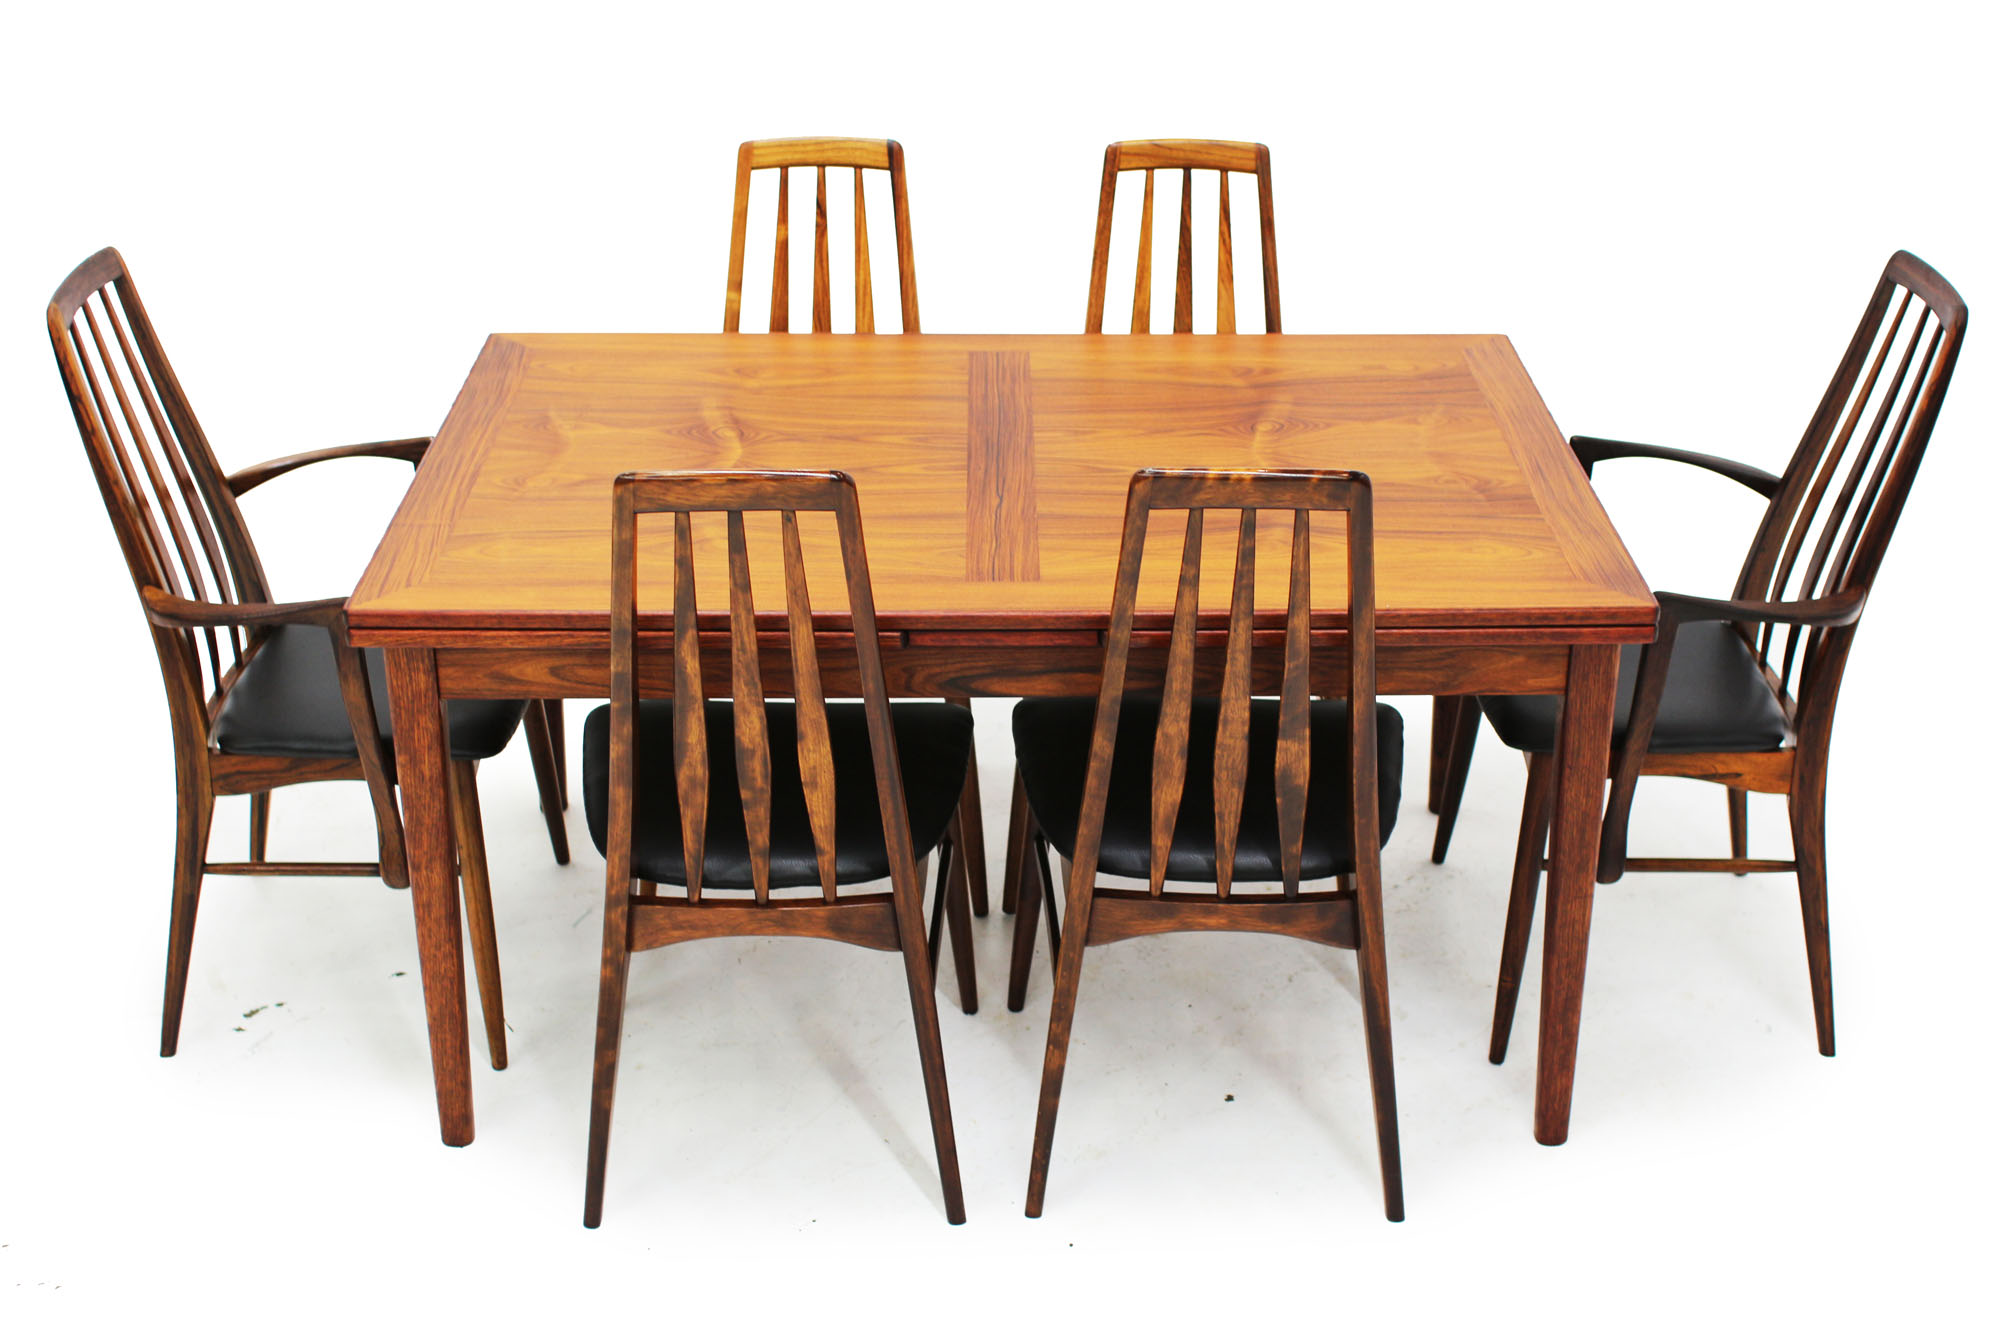 Scandinavian Rosewood Dining Table by Skovby Made in Denmark (3).jpg